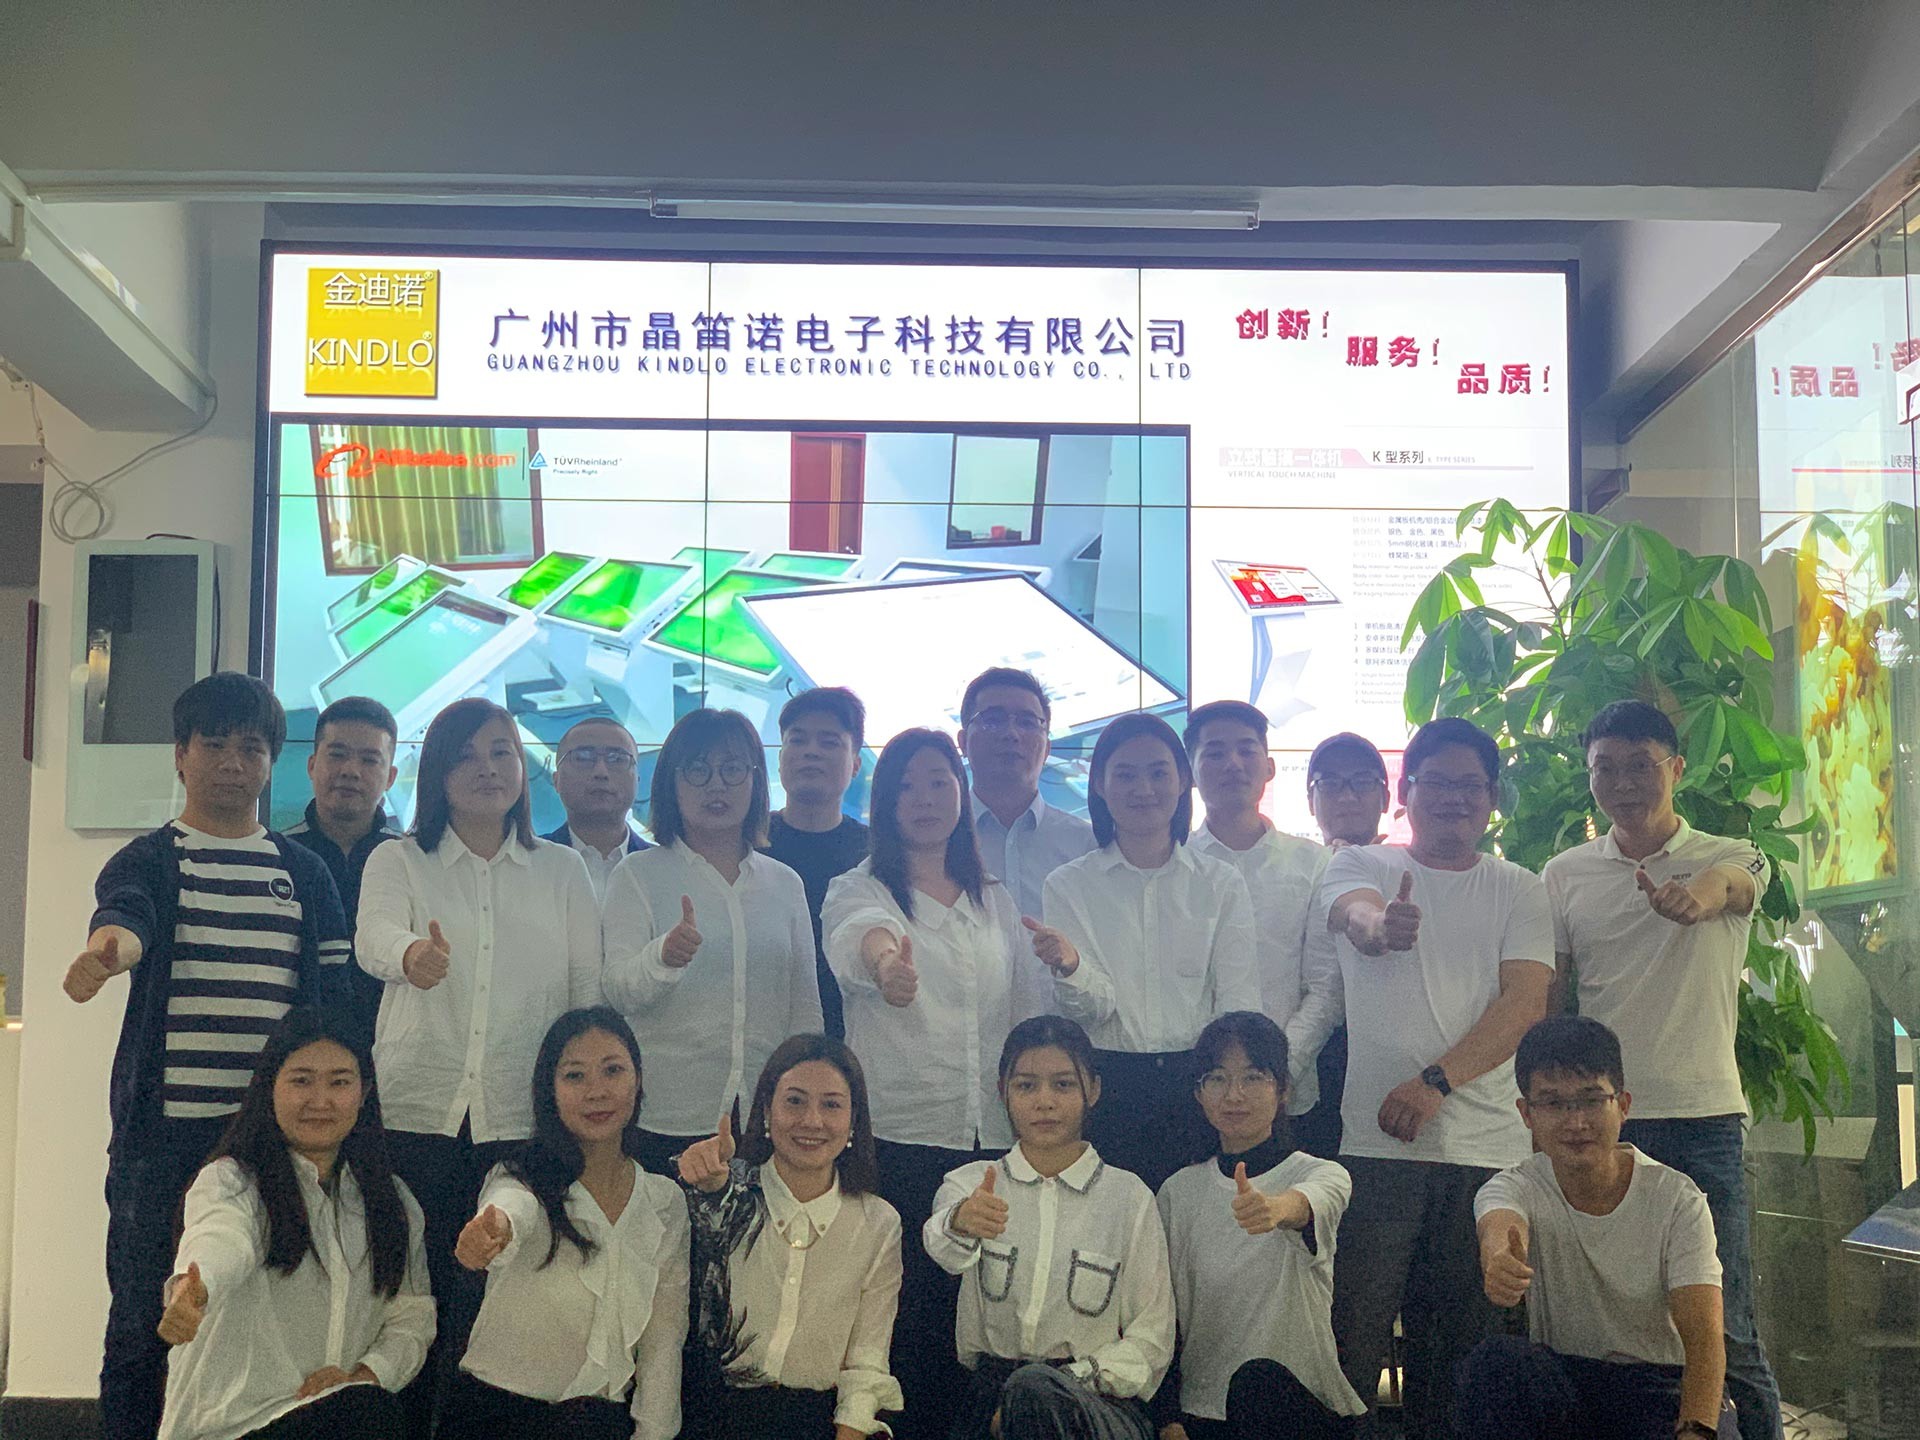 中国 Guangzhou Jingdinuo Electronic Technology Co., Ltd.